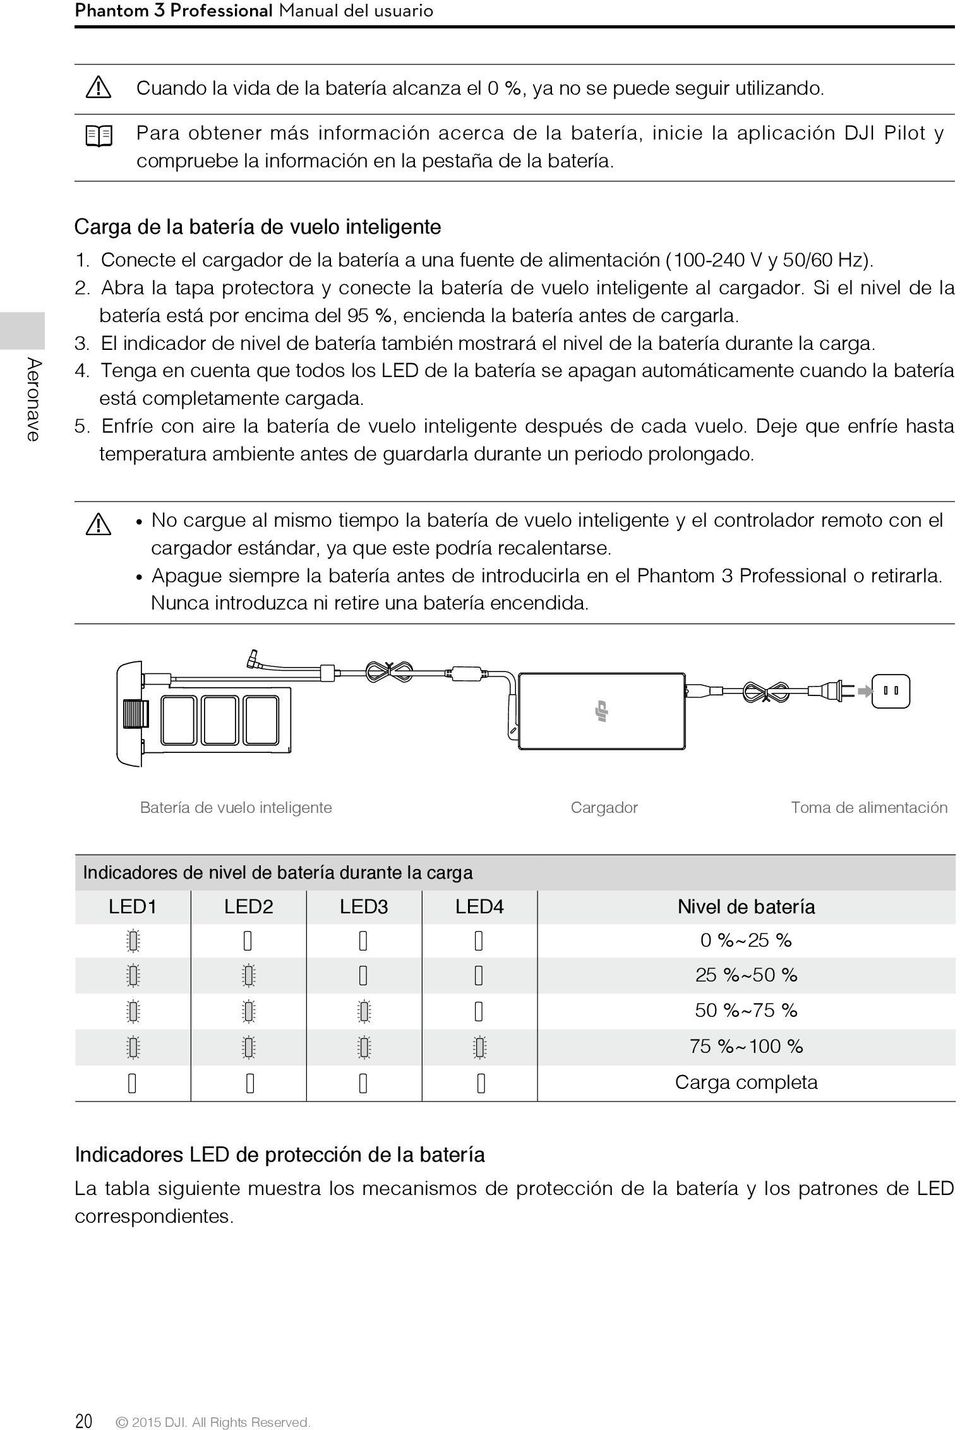 orificio de soplado lago Titicaca pluma PHANTOM 3. Manual del usuario PROFESSIONAL V - PDF Descargar libre